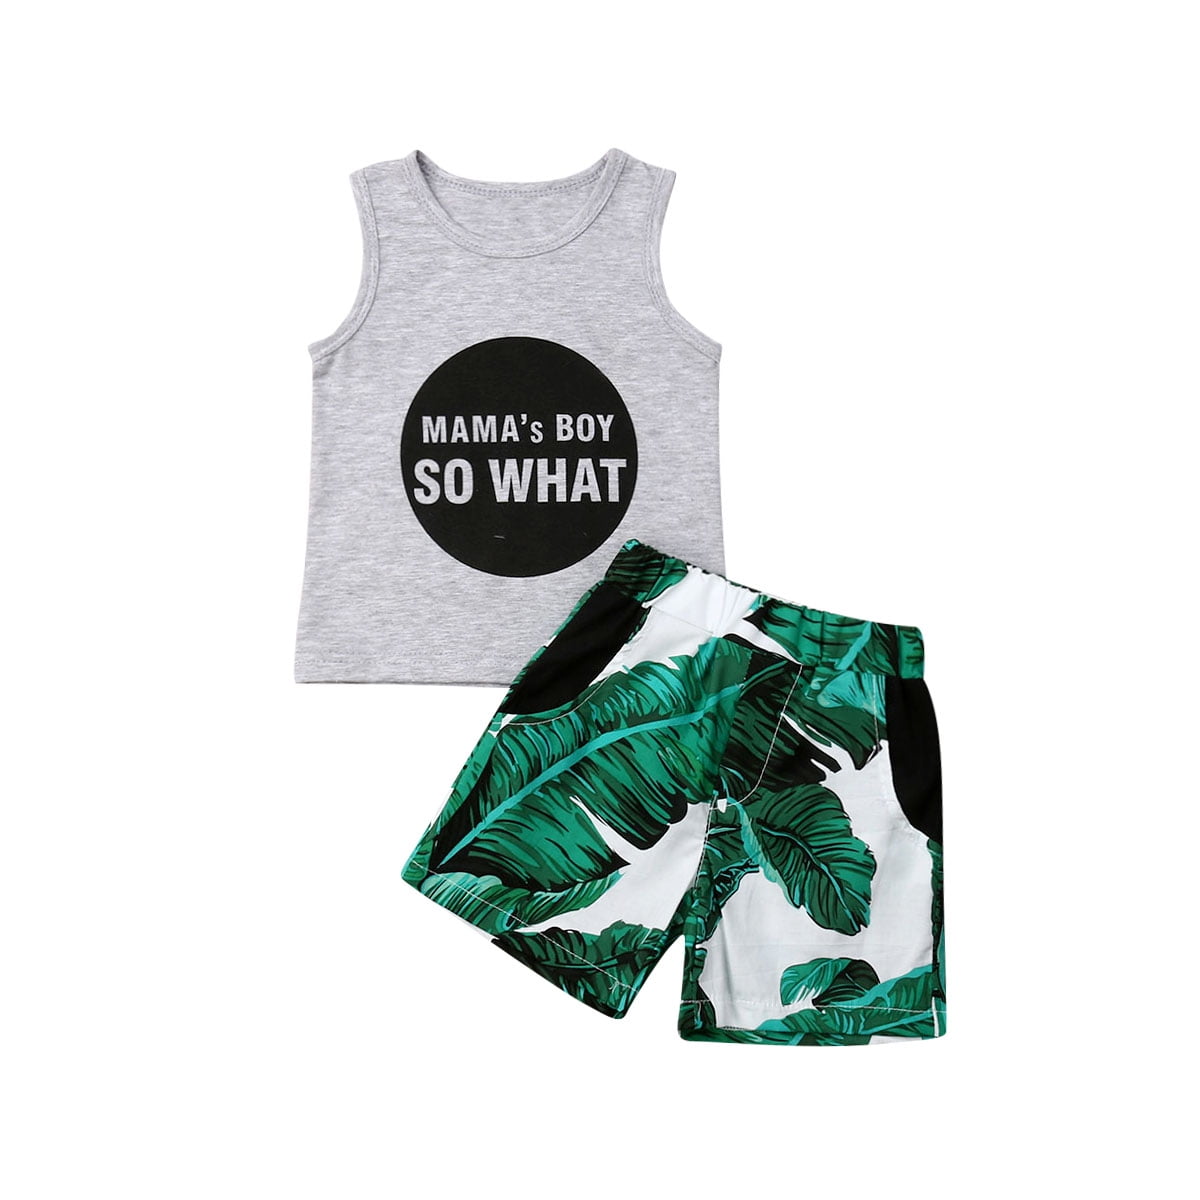 Pants Shorts Outfits Cute Letters Print Tank Tops T-Shirt 2Pcs Baby Boys Summer Clothes Sets 